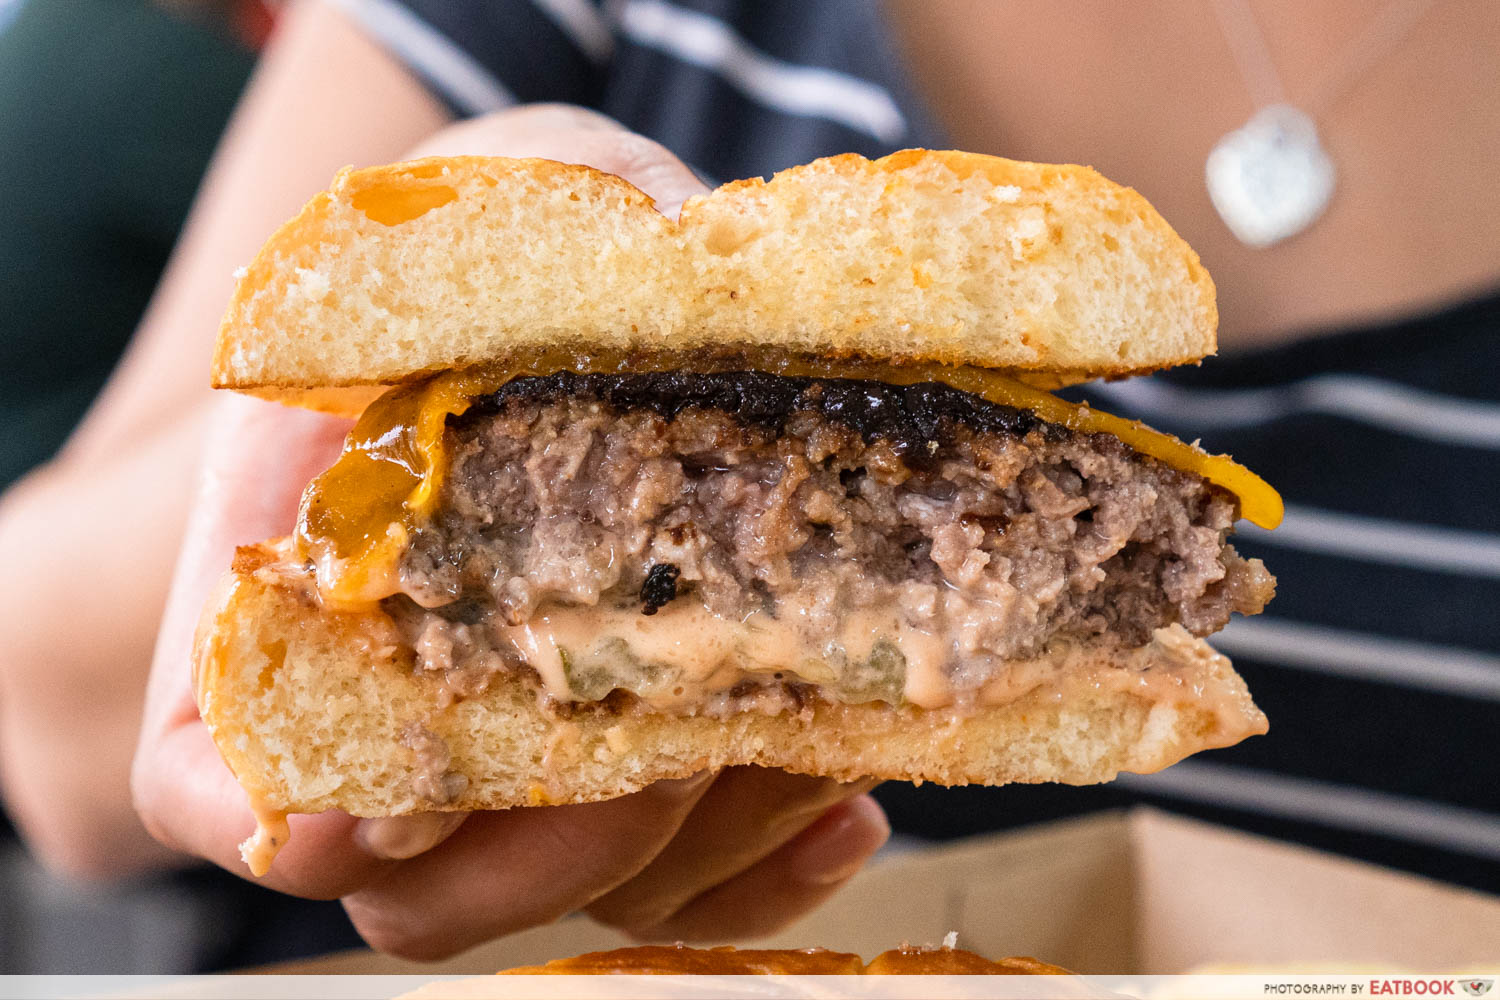 blackgoat burgers - grassfed flank and chuck burger cross section